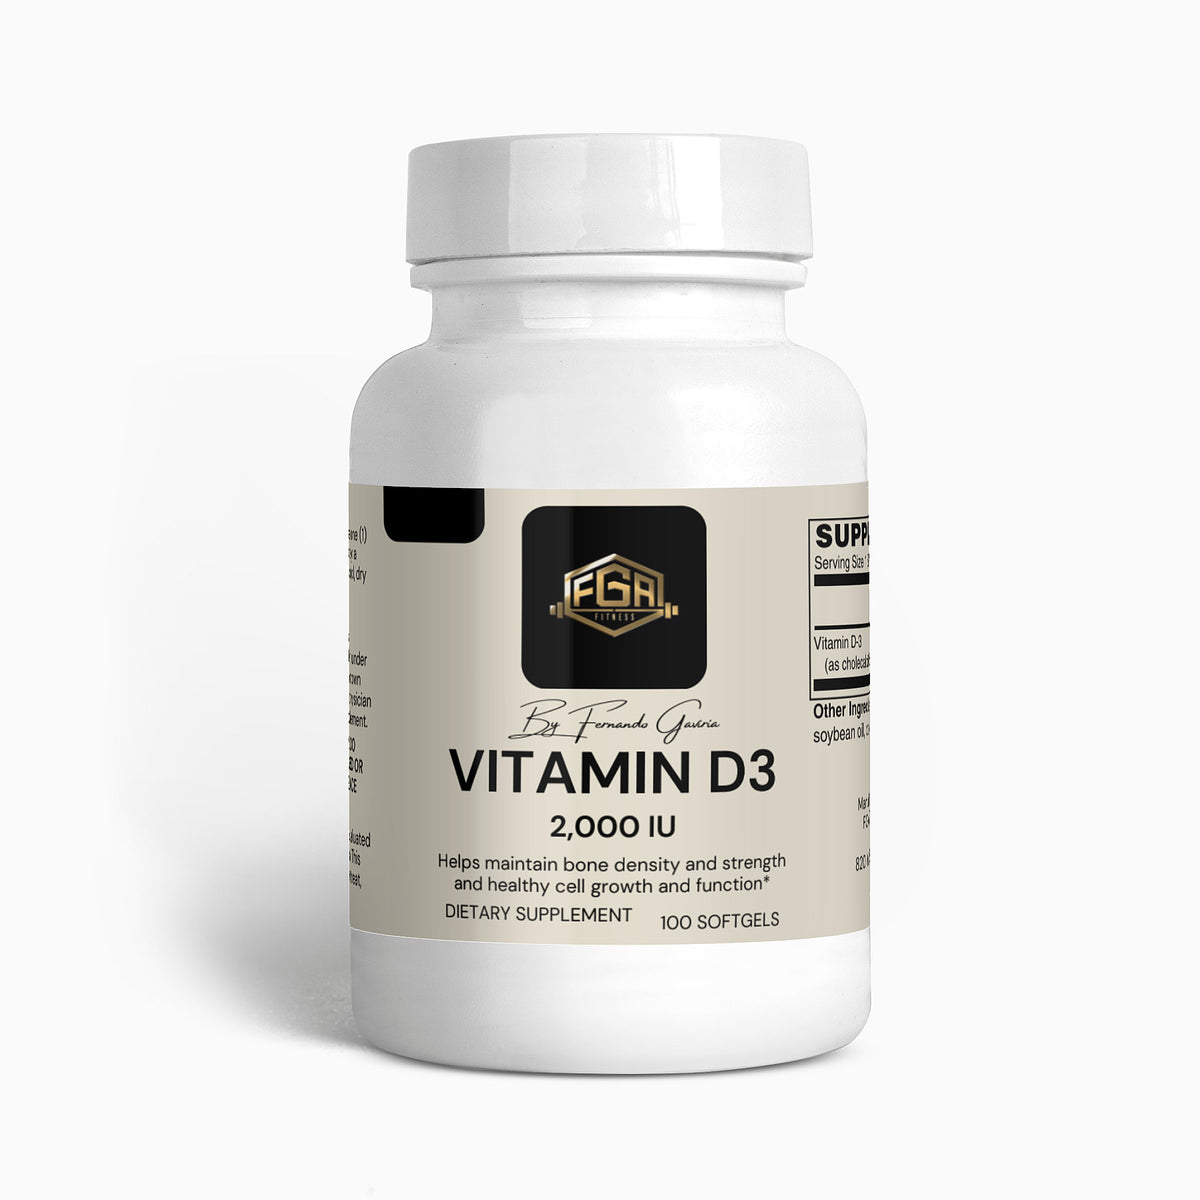 Vitamina D3